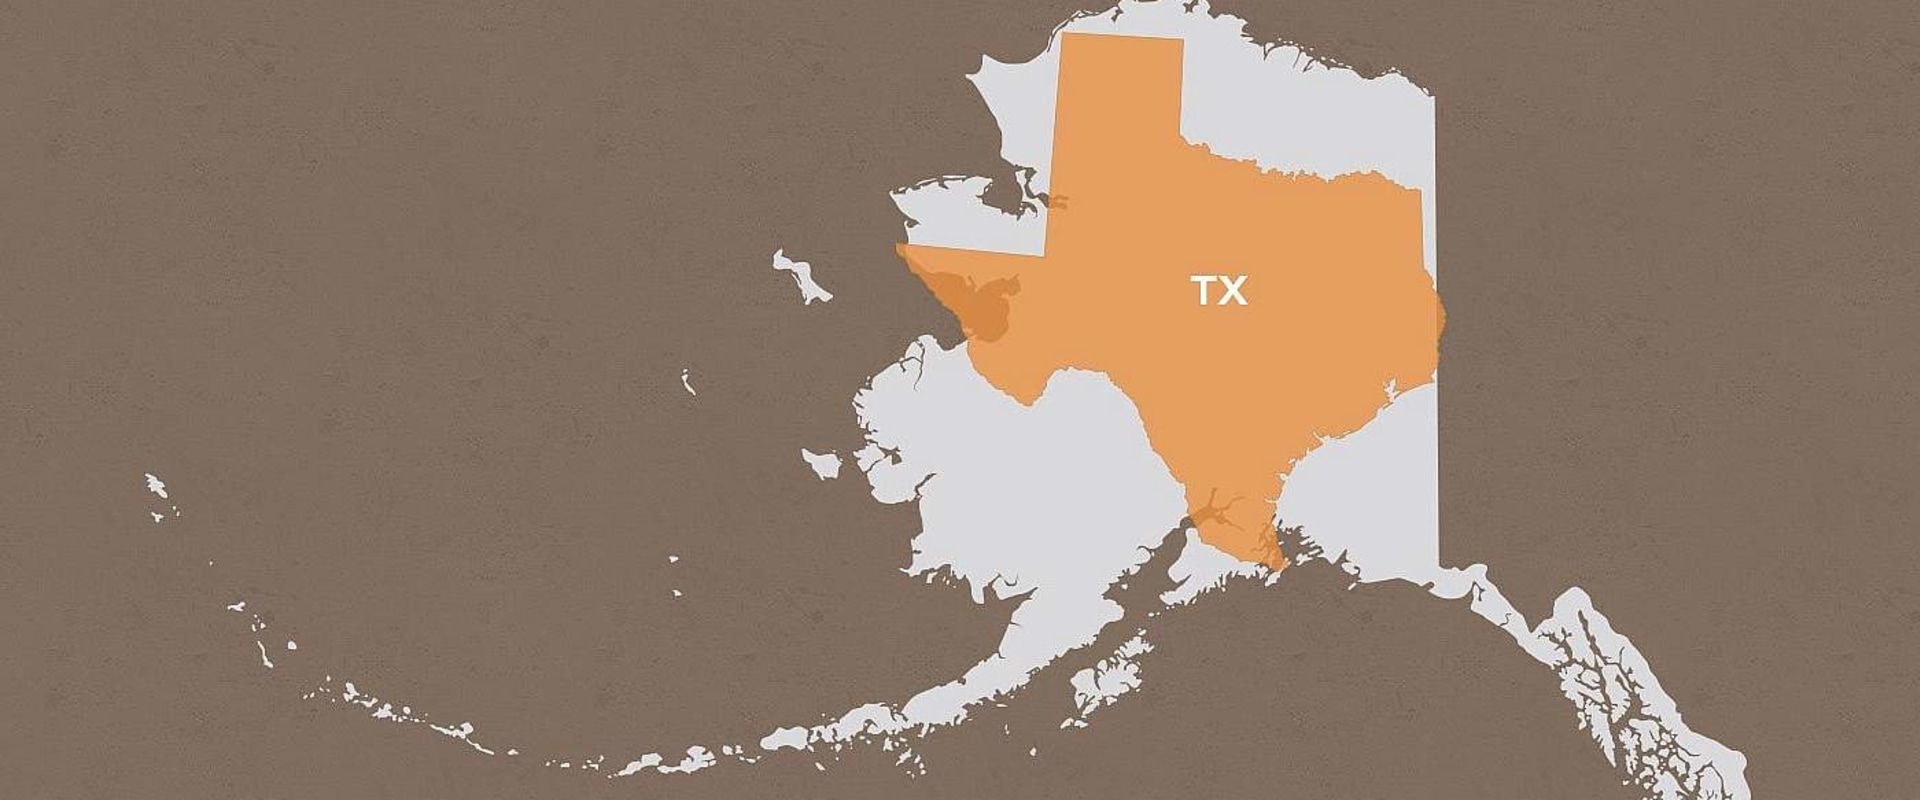 Can you fit texas into alaska?